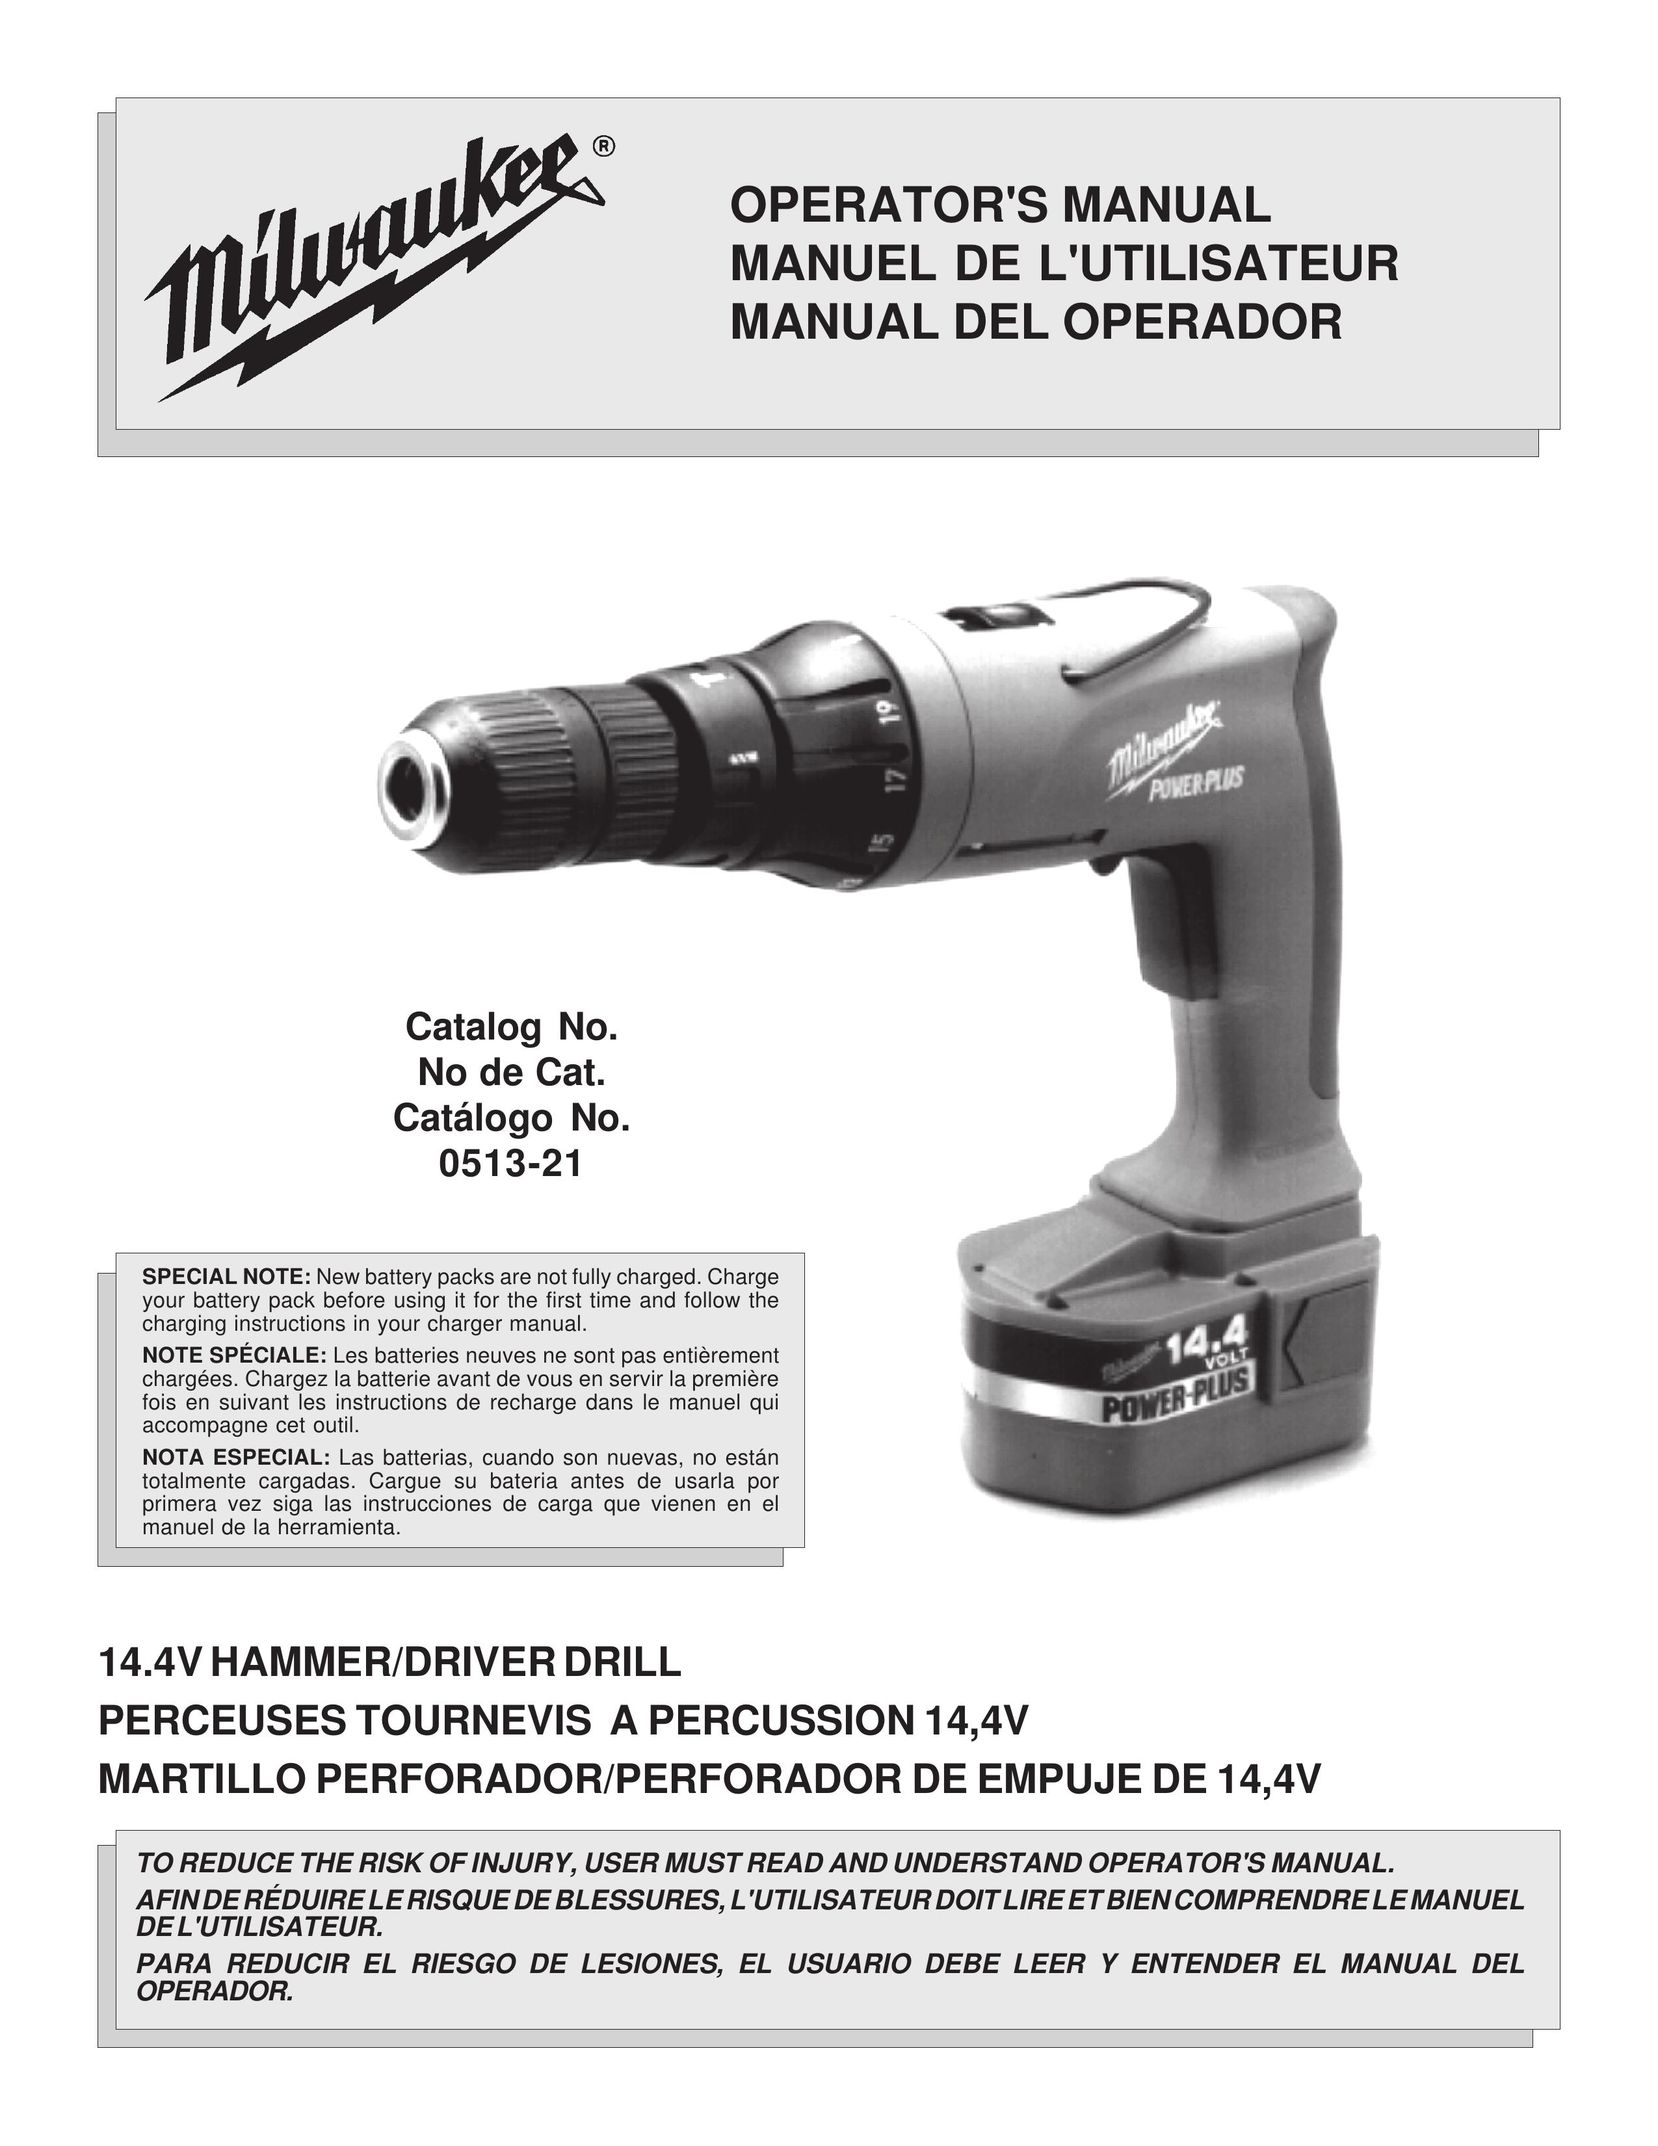 Bowflex 0513-21 Cordless Drill User Manual